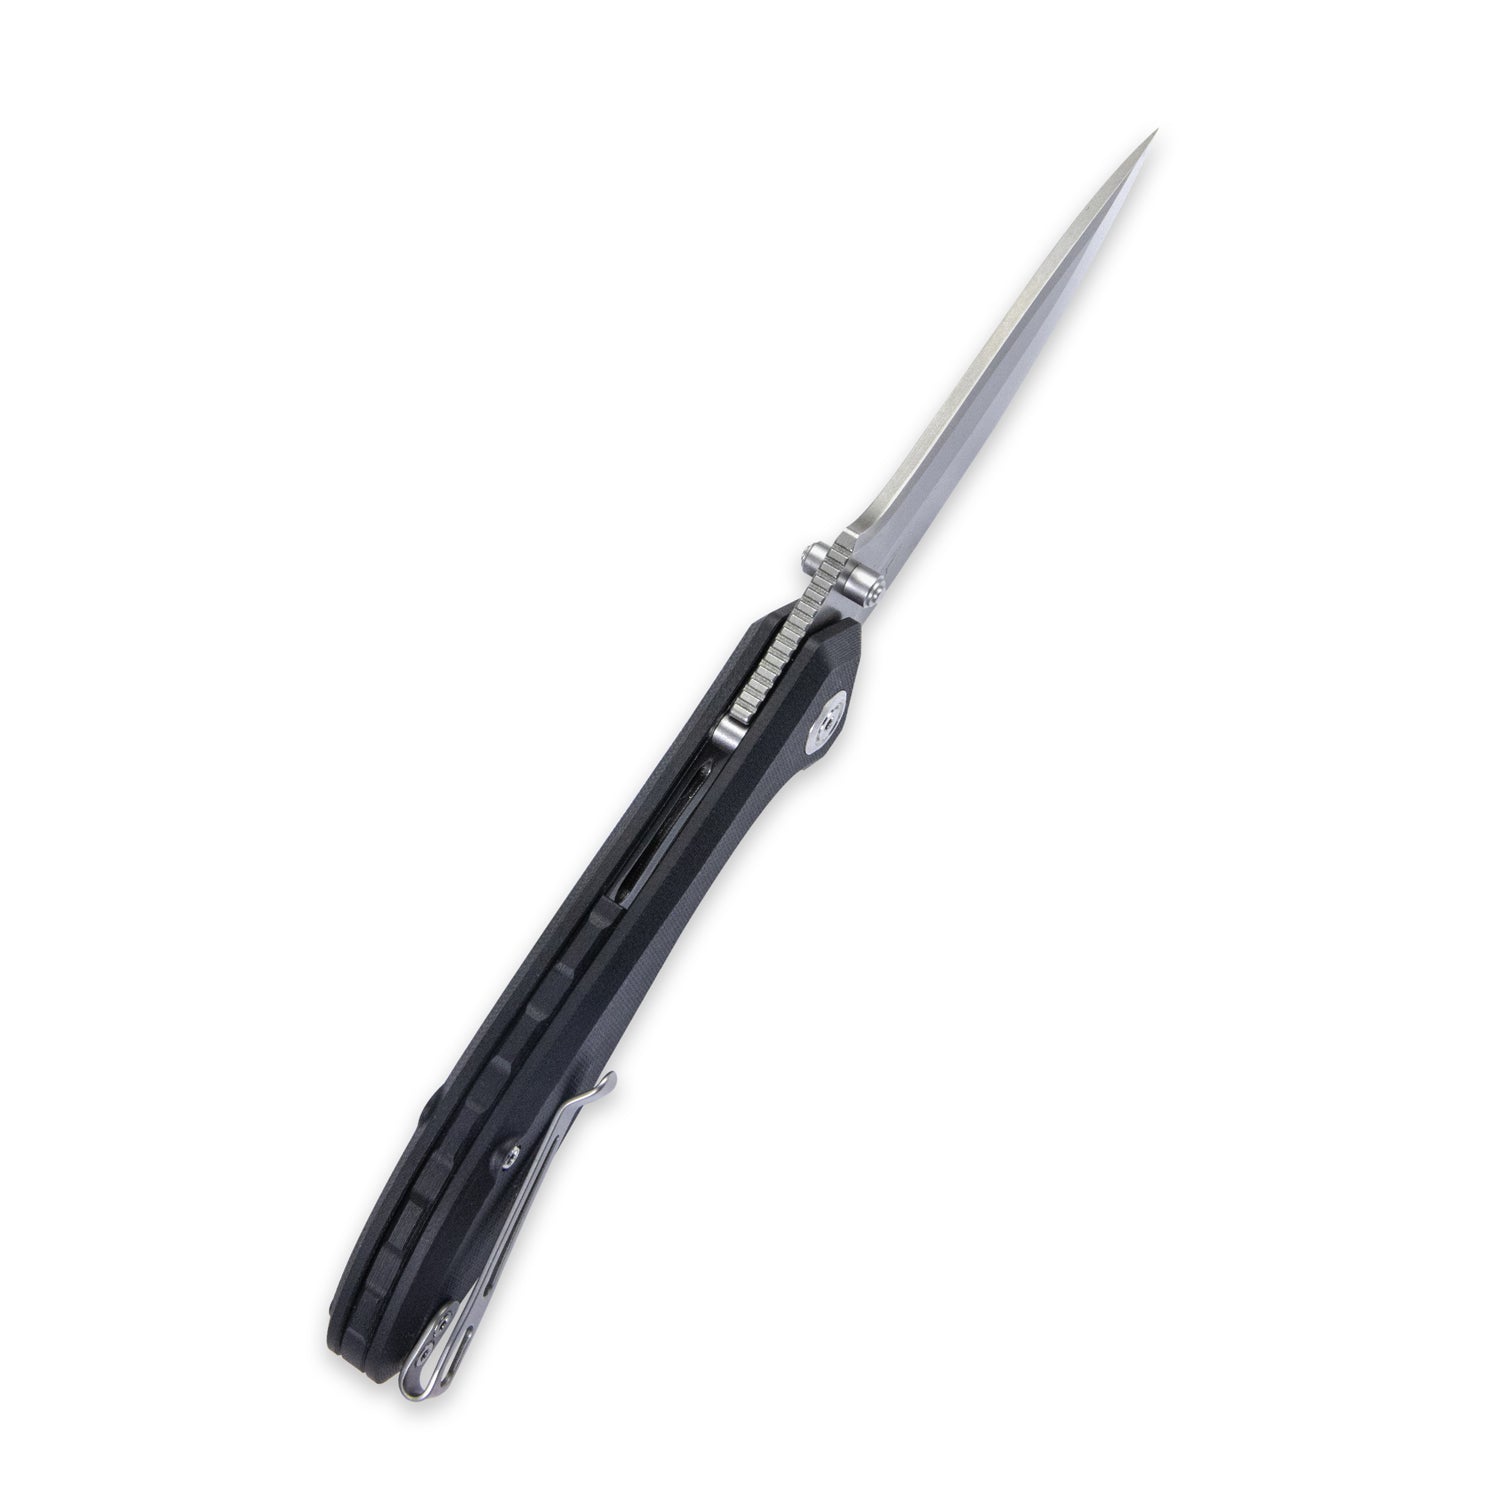 Kubey Ruckus Klappmesser Liner Lock Folding Knife Black G10 Handle 3.31" Bead Blasted AUS-10 KU314F